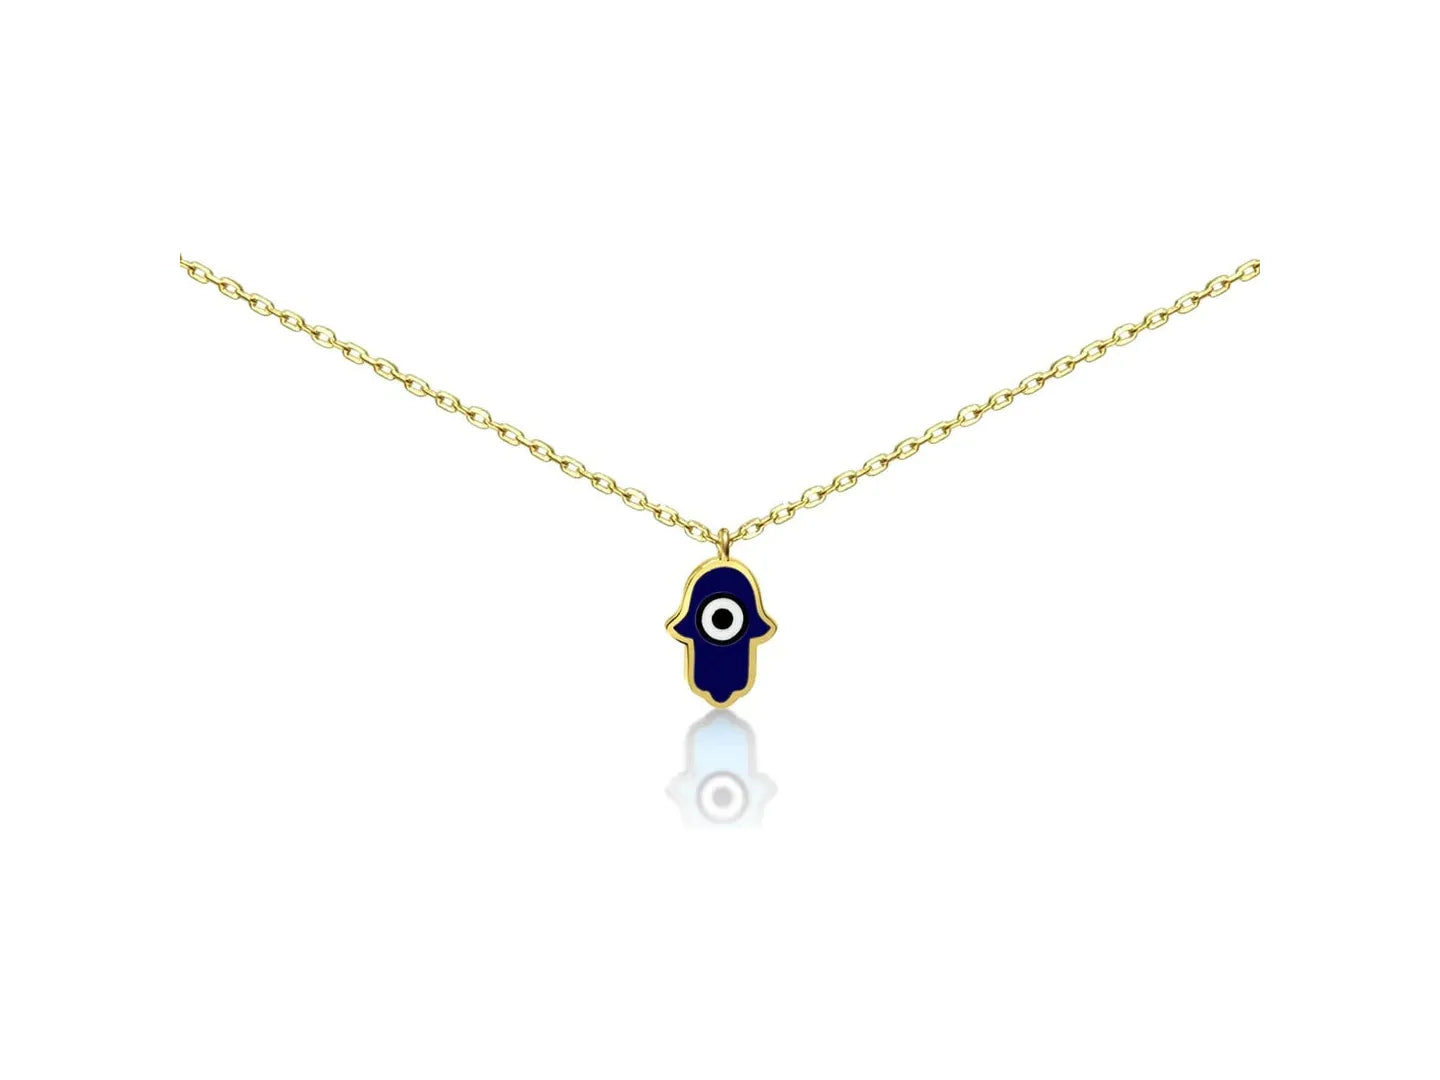 Hamsa with evil eye pendant necklace